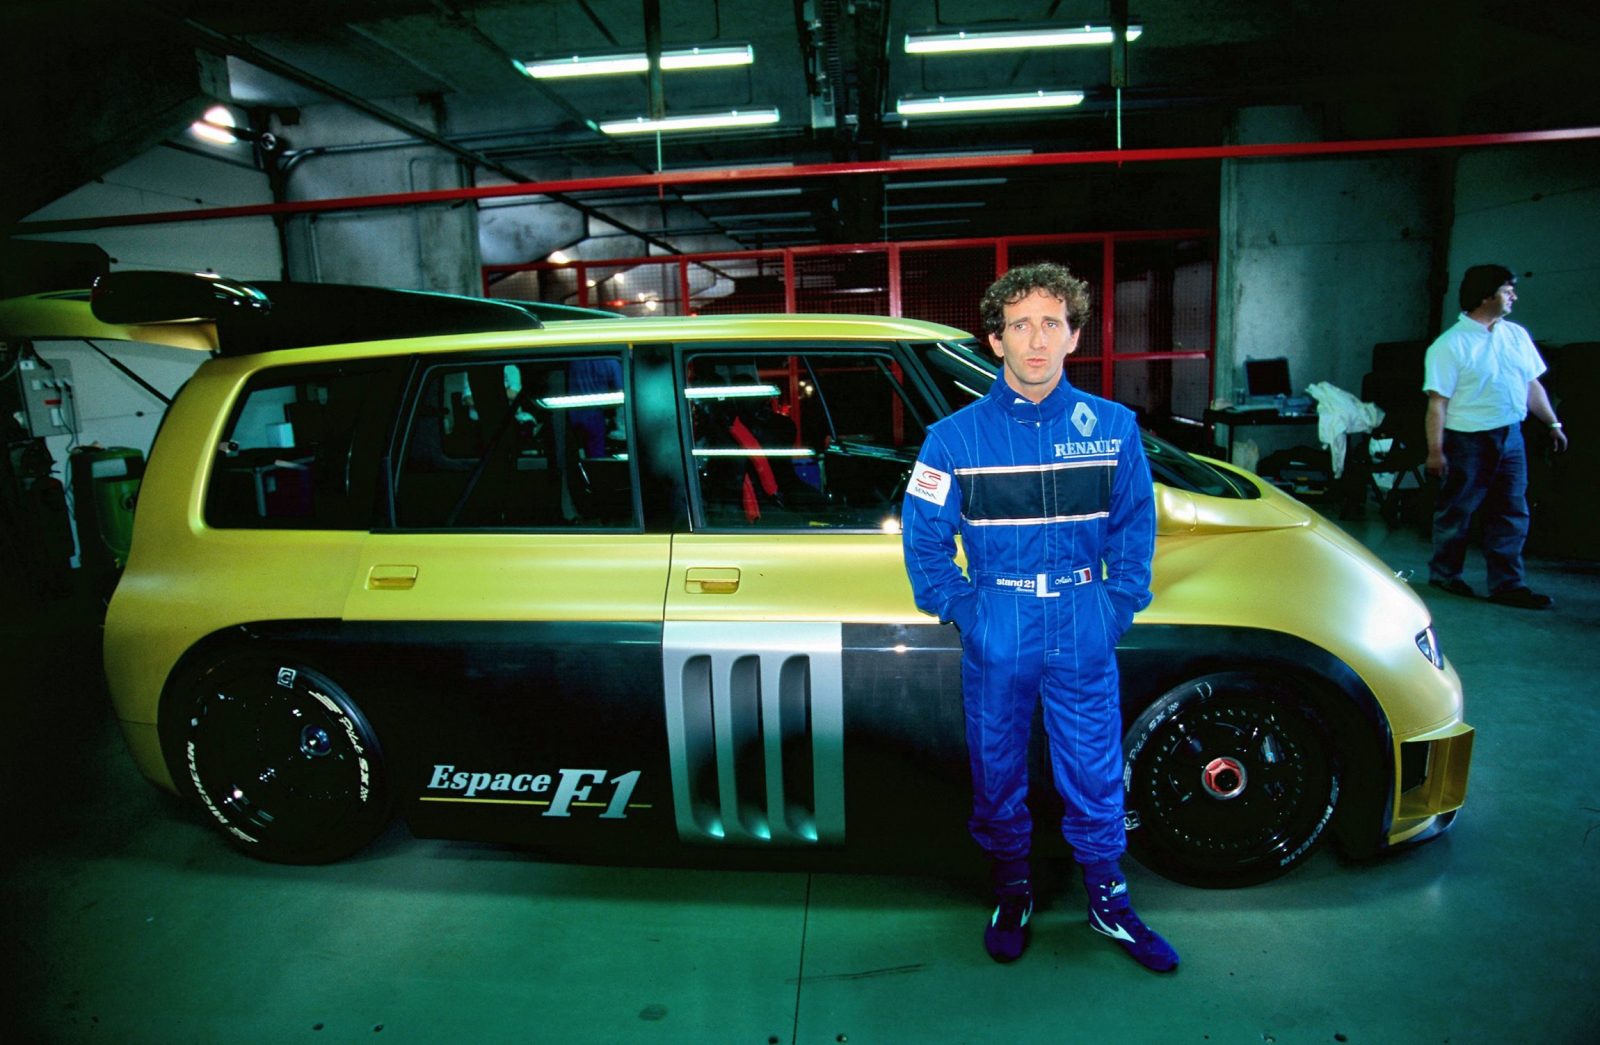 Renault-Espace-F1-September-1994-37-copy-1600x1045.jpg